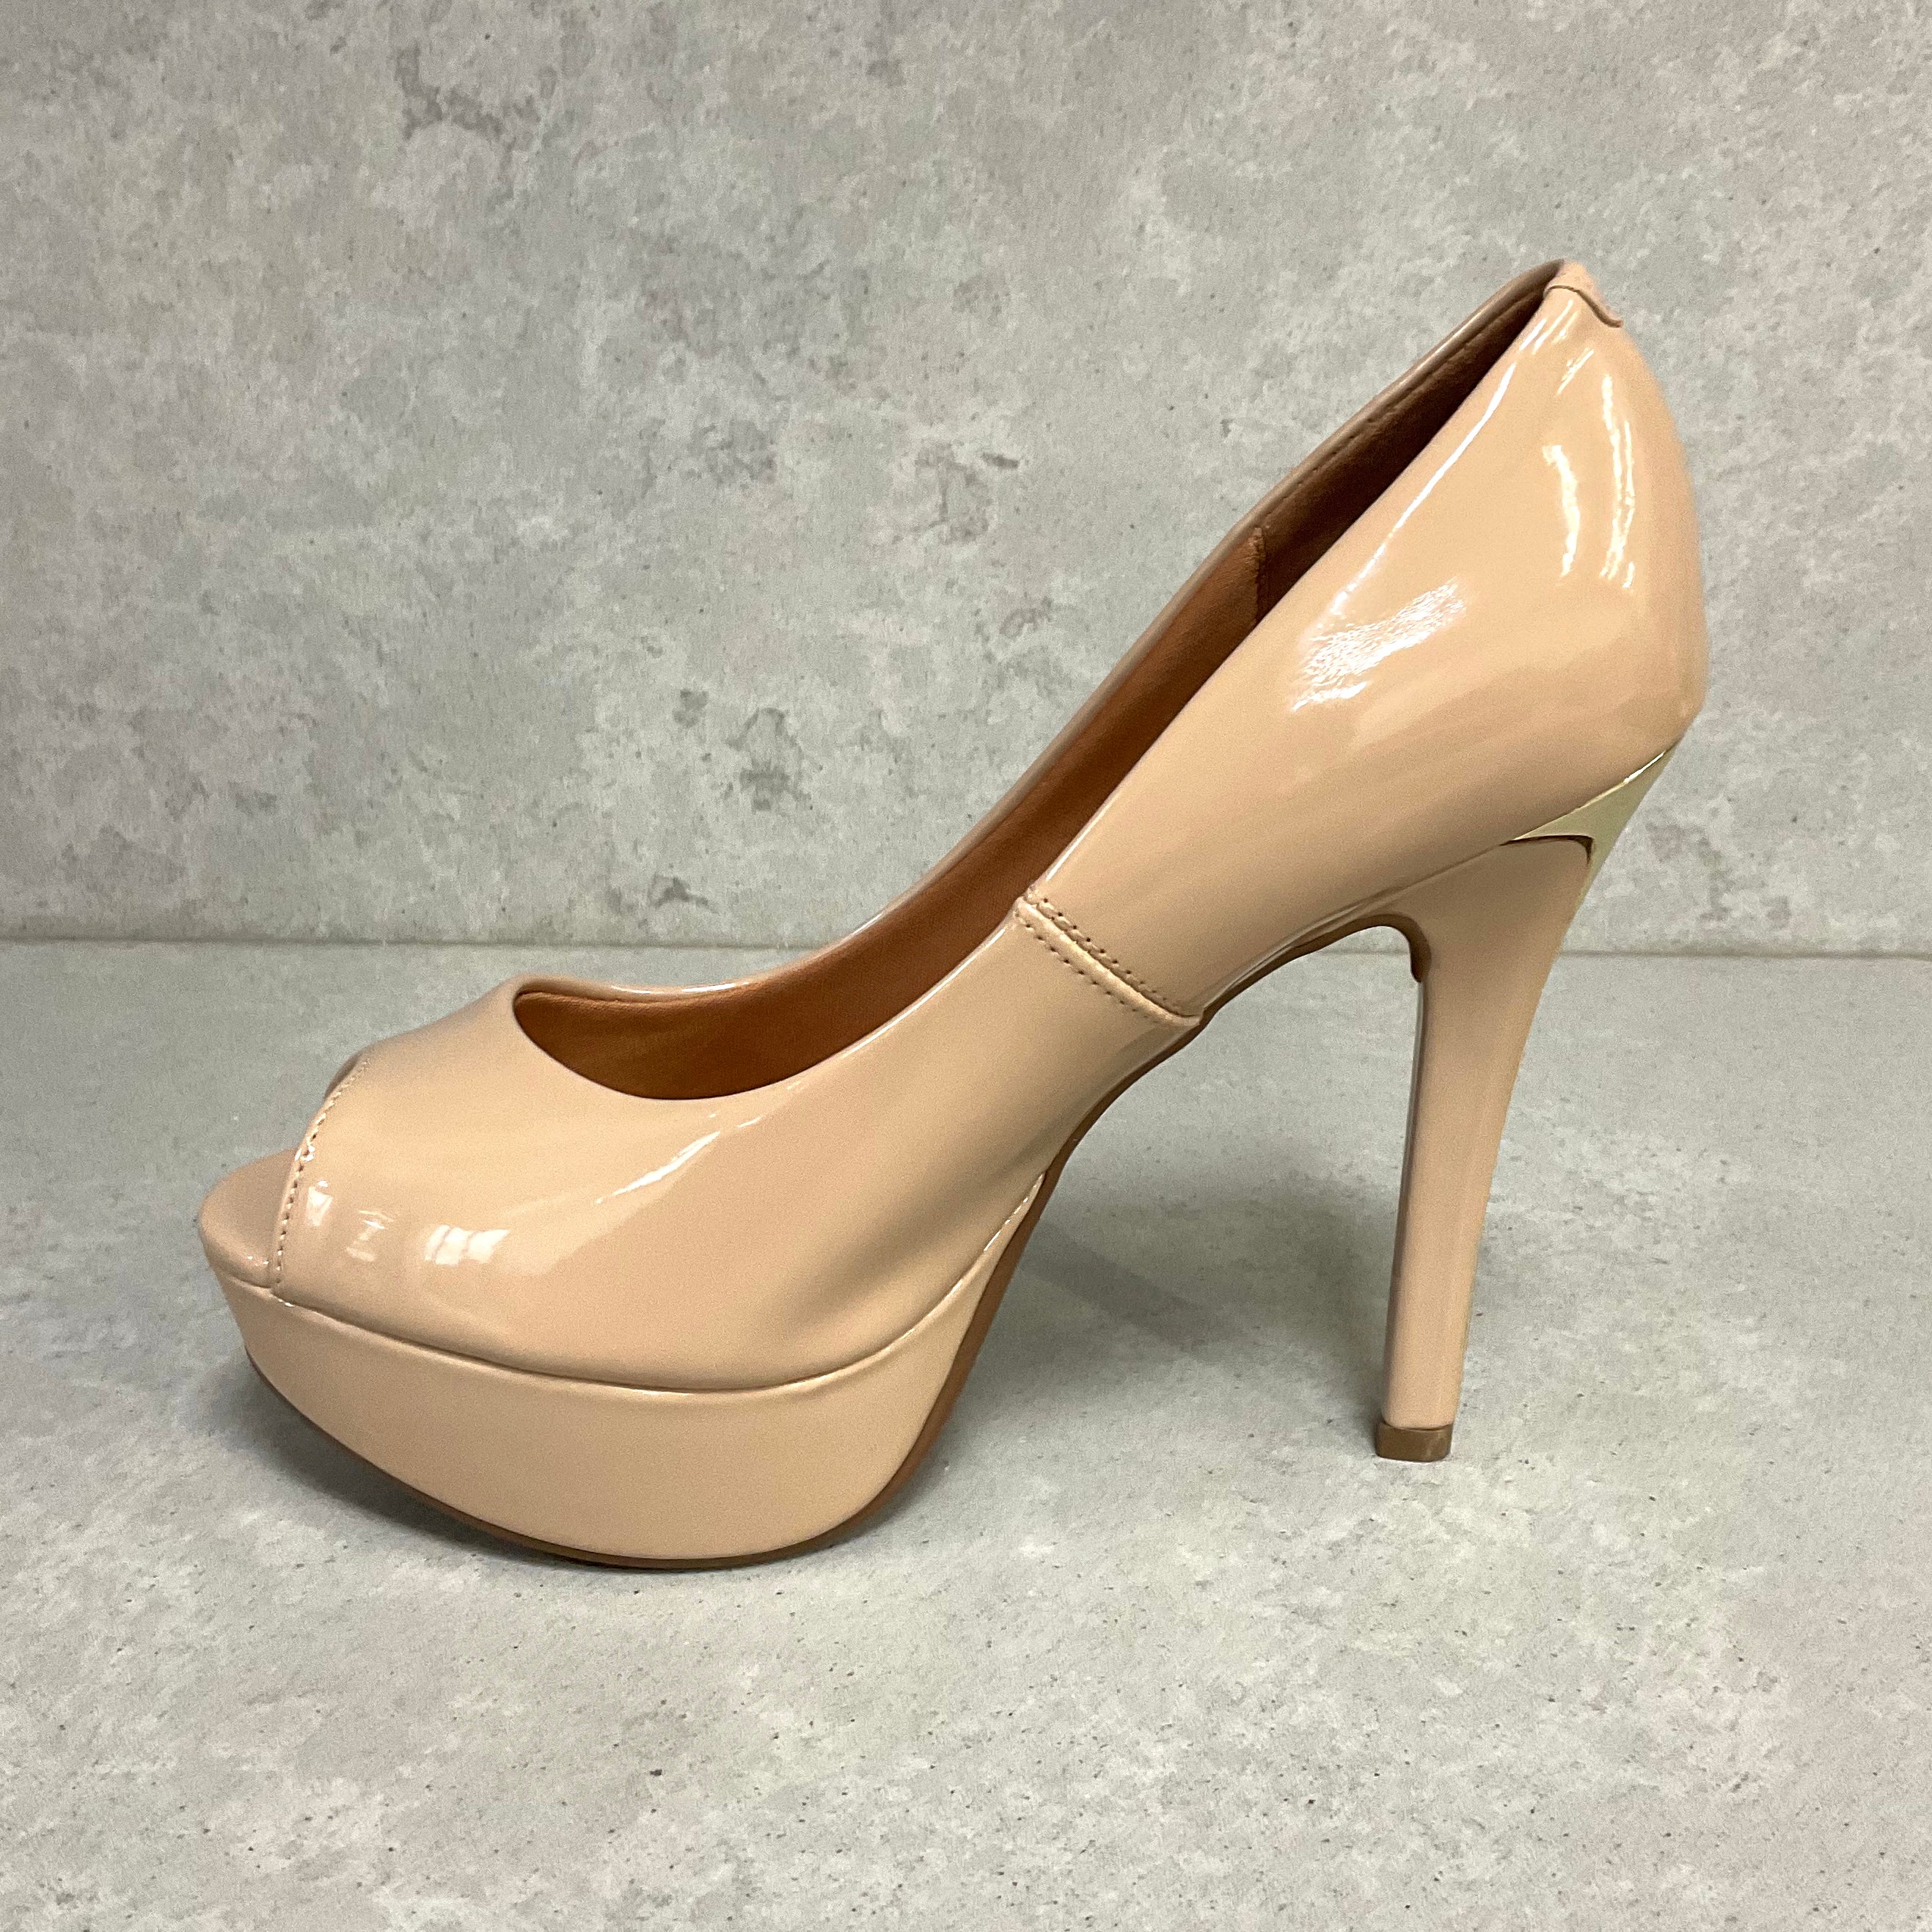 ASOS DESIGN National strappy high heeled sandals in beige | ASOS